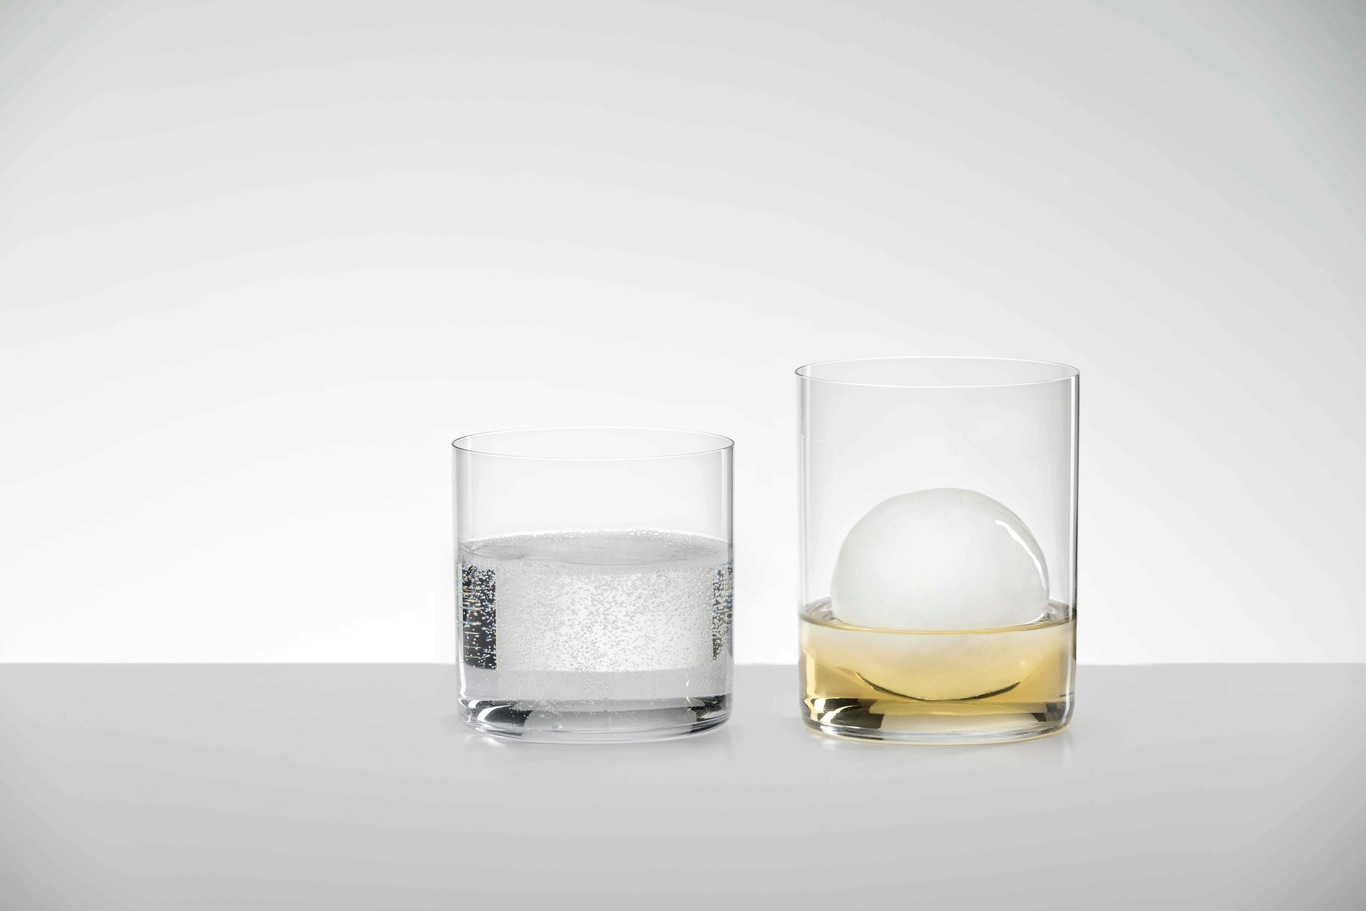 https://royaldesign.com/image/11/riedel-h2o-water-glass-set-of-2-1?w=800&quality=80